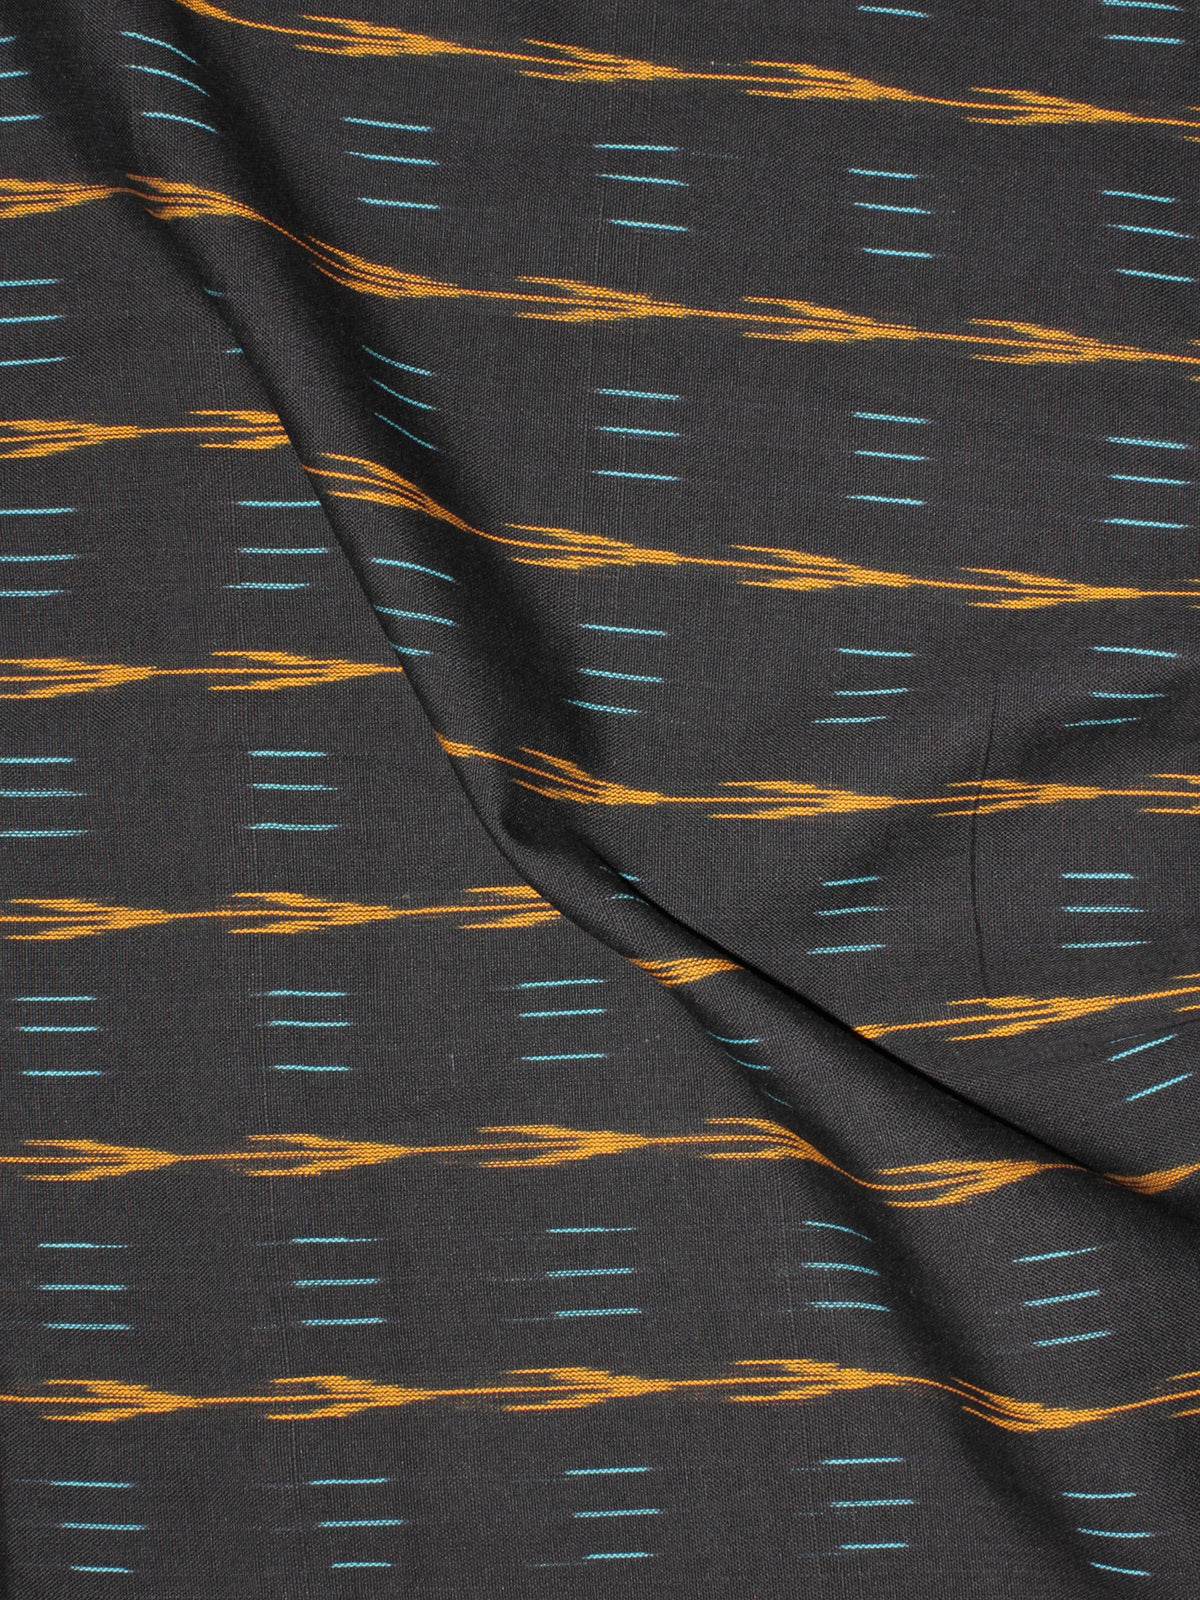 Black Teal Blue Orange Pochampally Hand Weaved Ikat Fabric Per Meter - F0916754